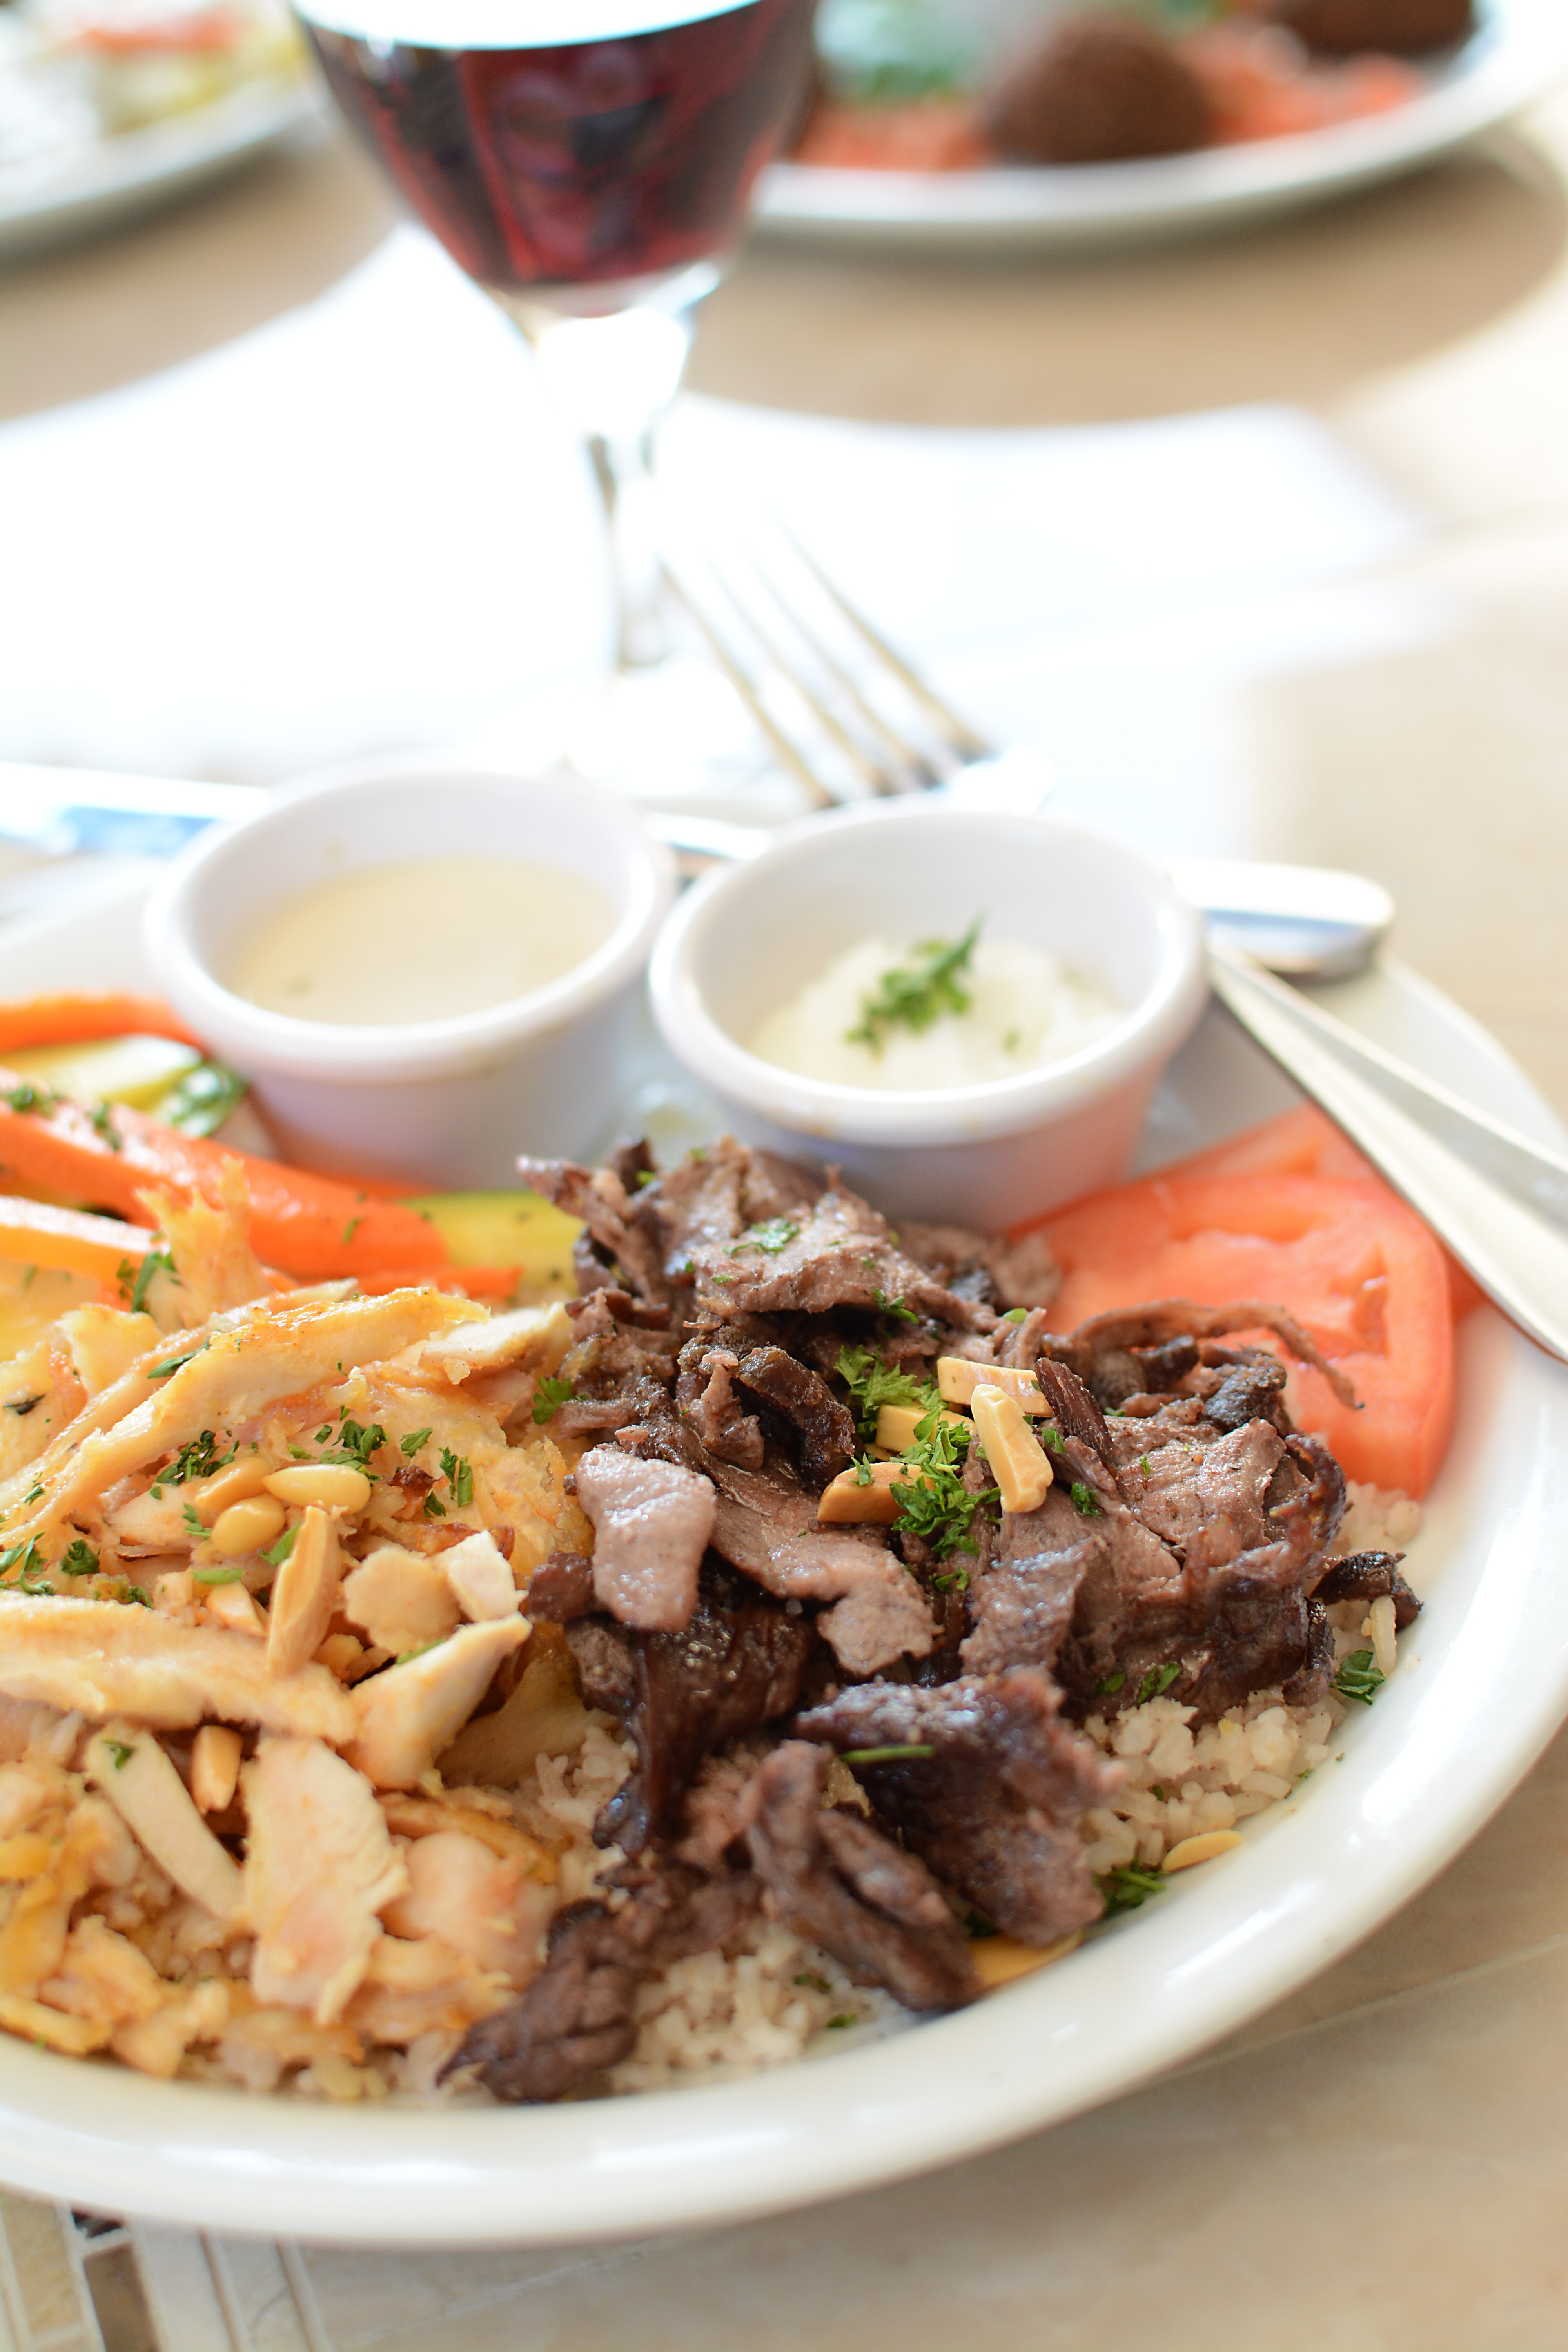 New restaurant serves Shelter Cove Mediterranean cuisine - Hilton Head